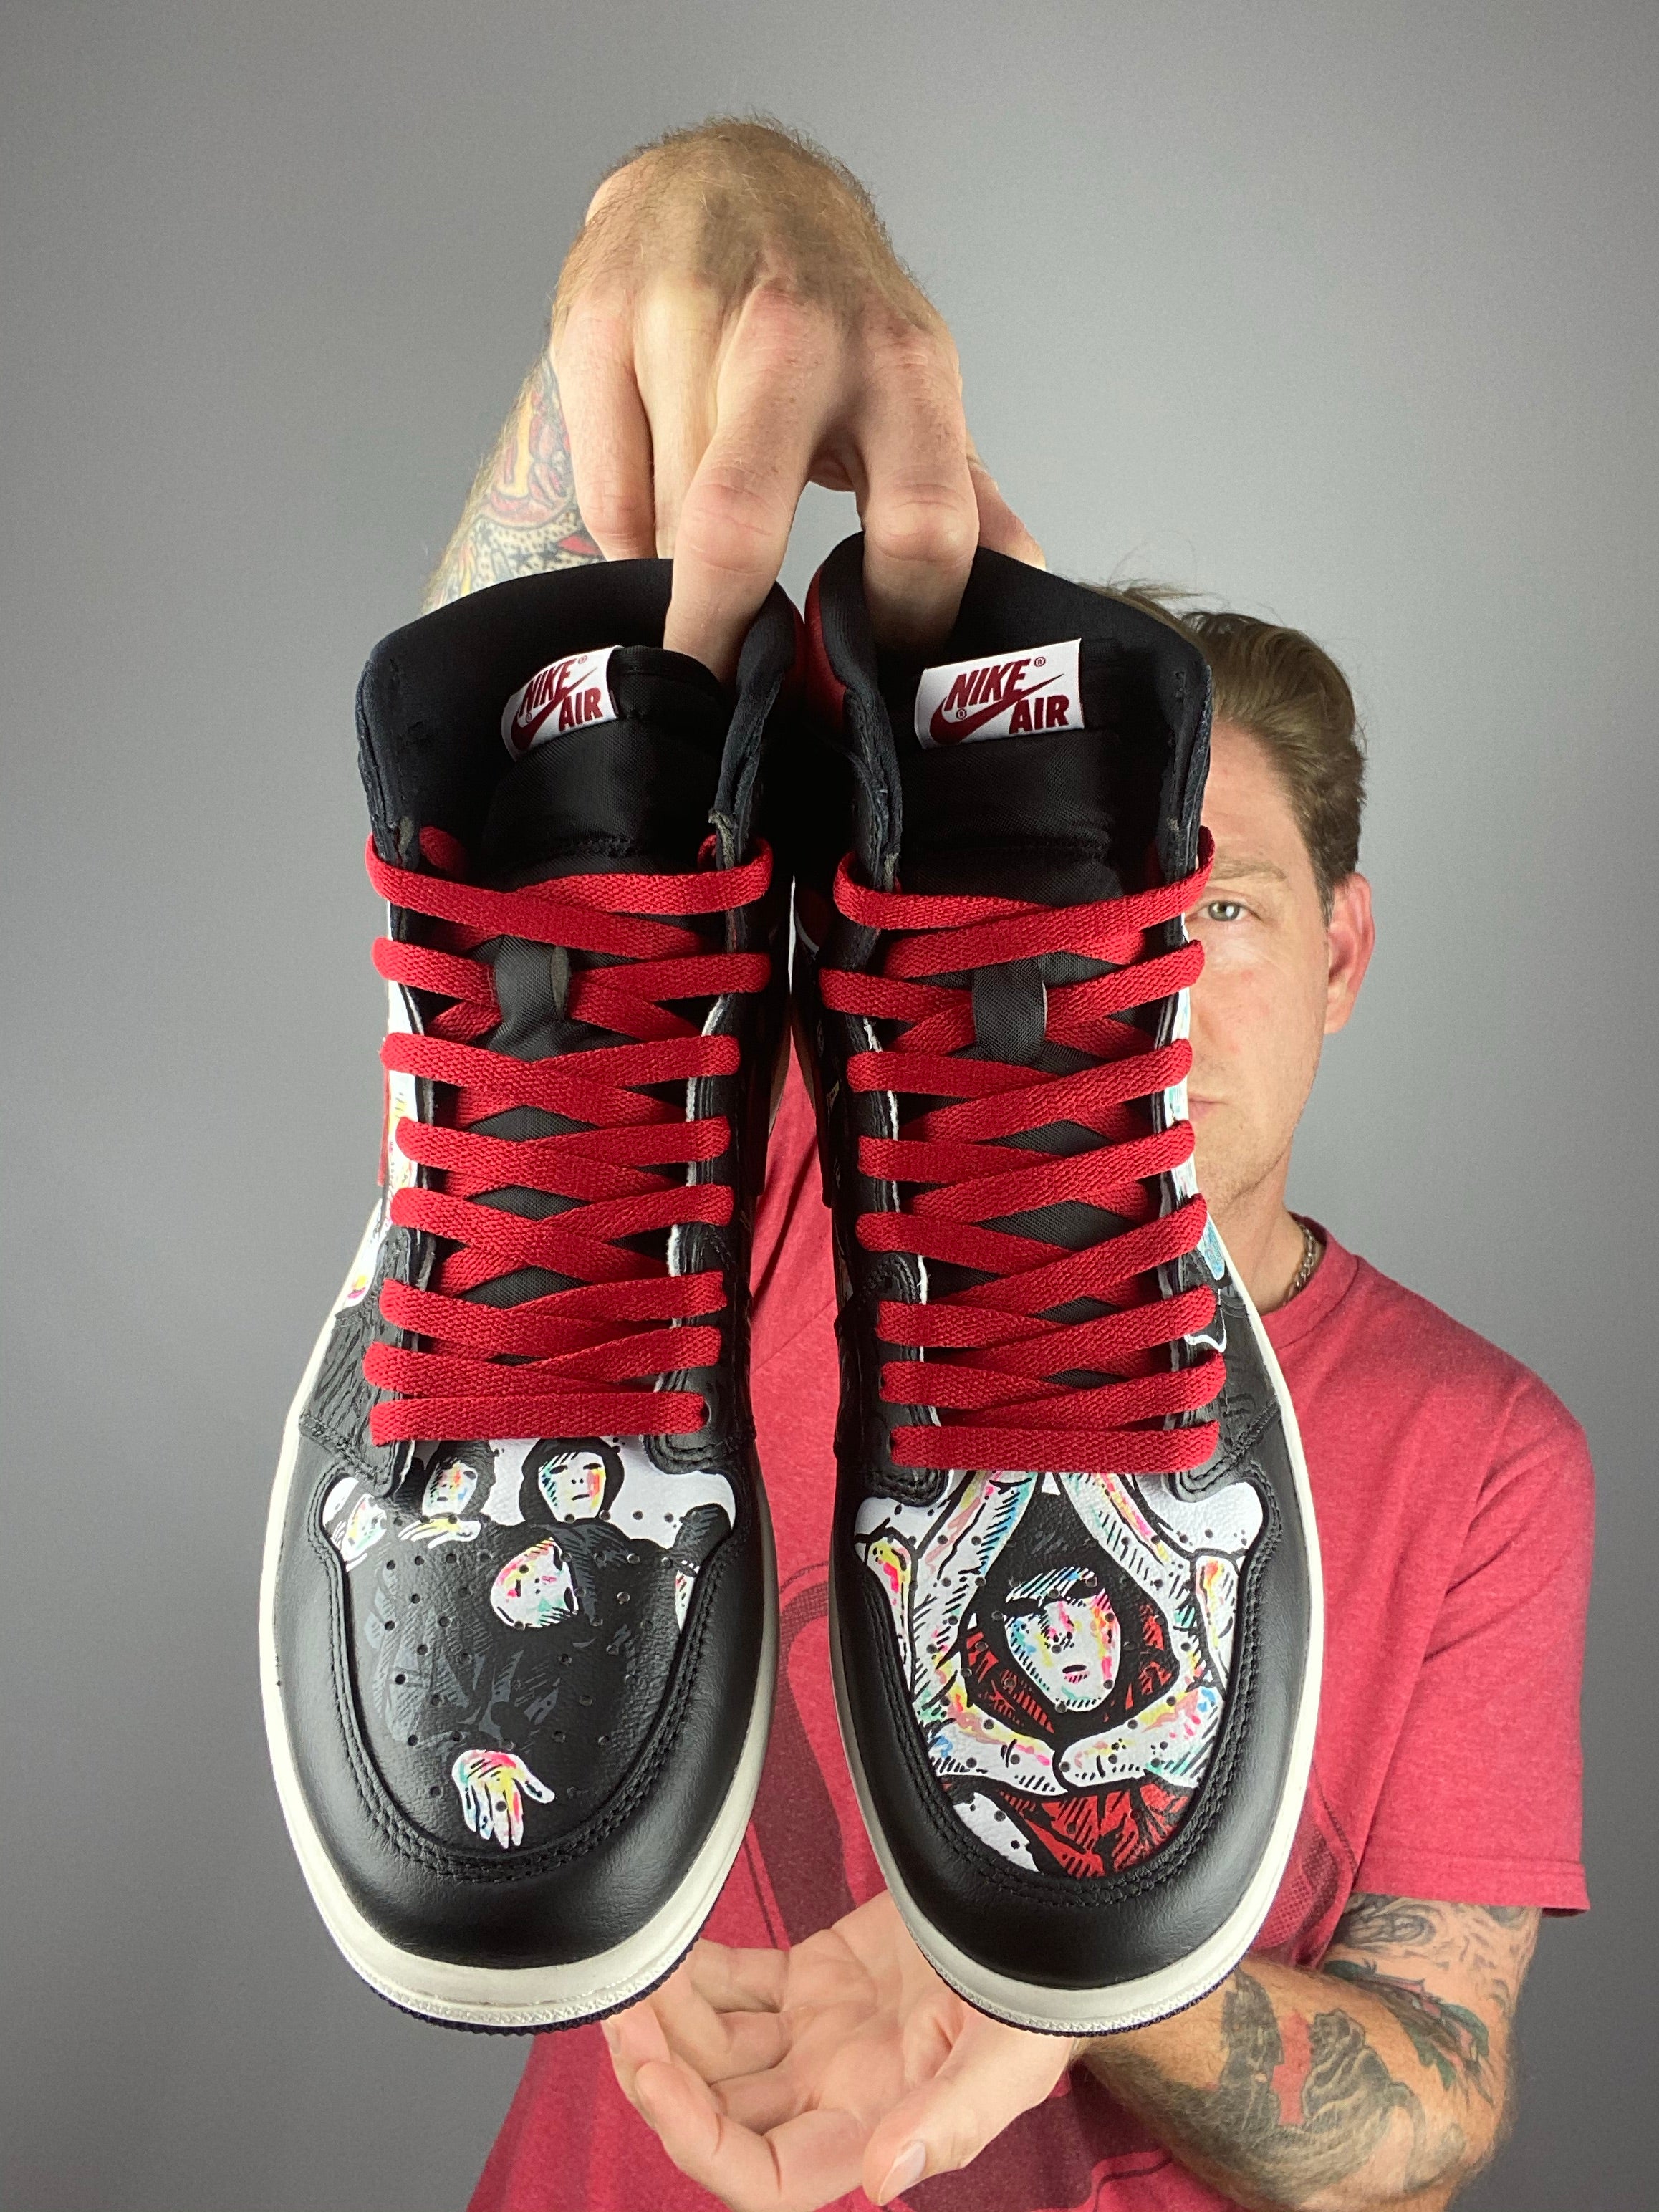 Jabbawockeez Team Issue - Nike Jordan retro shoes